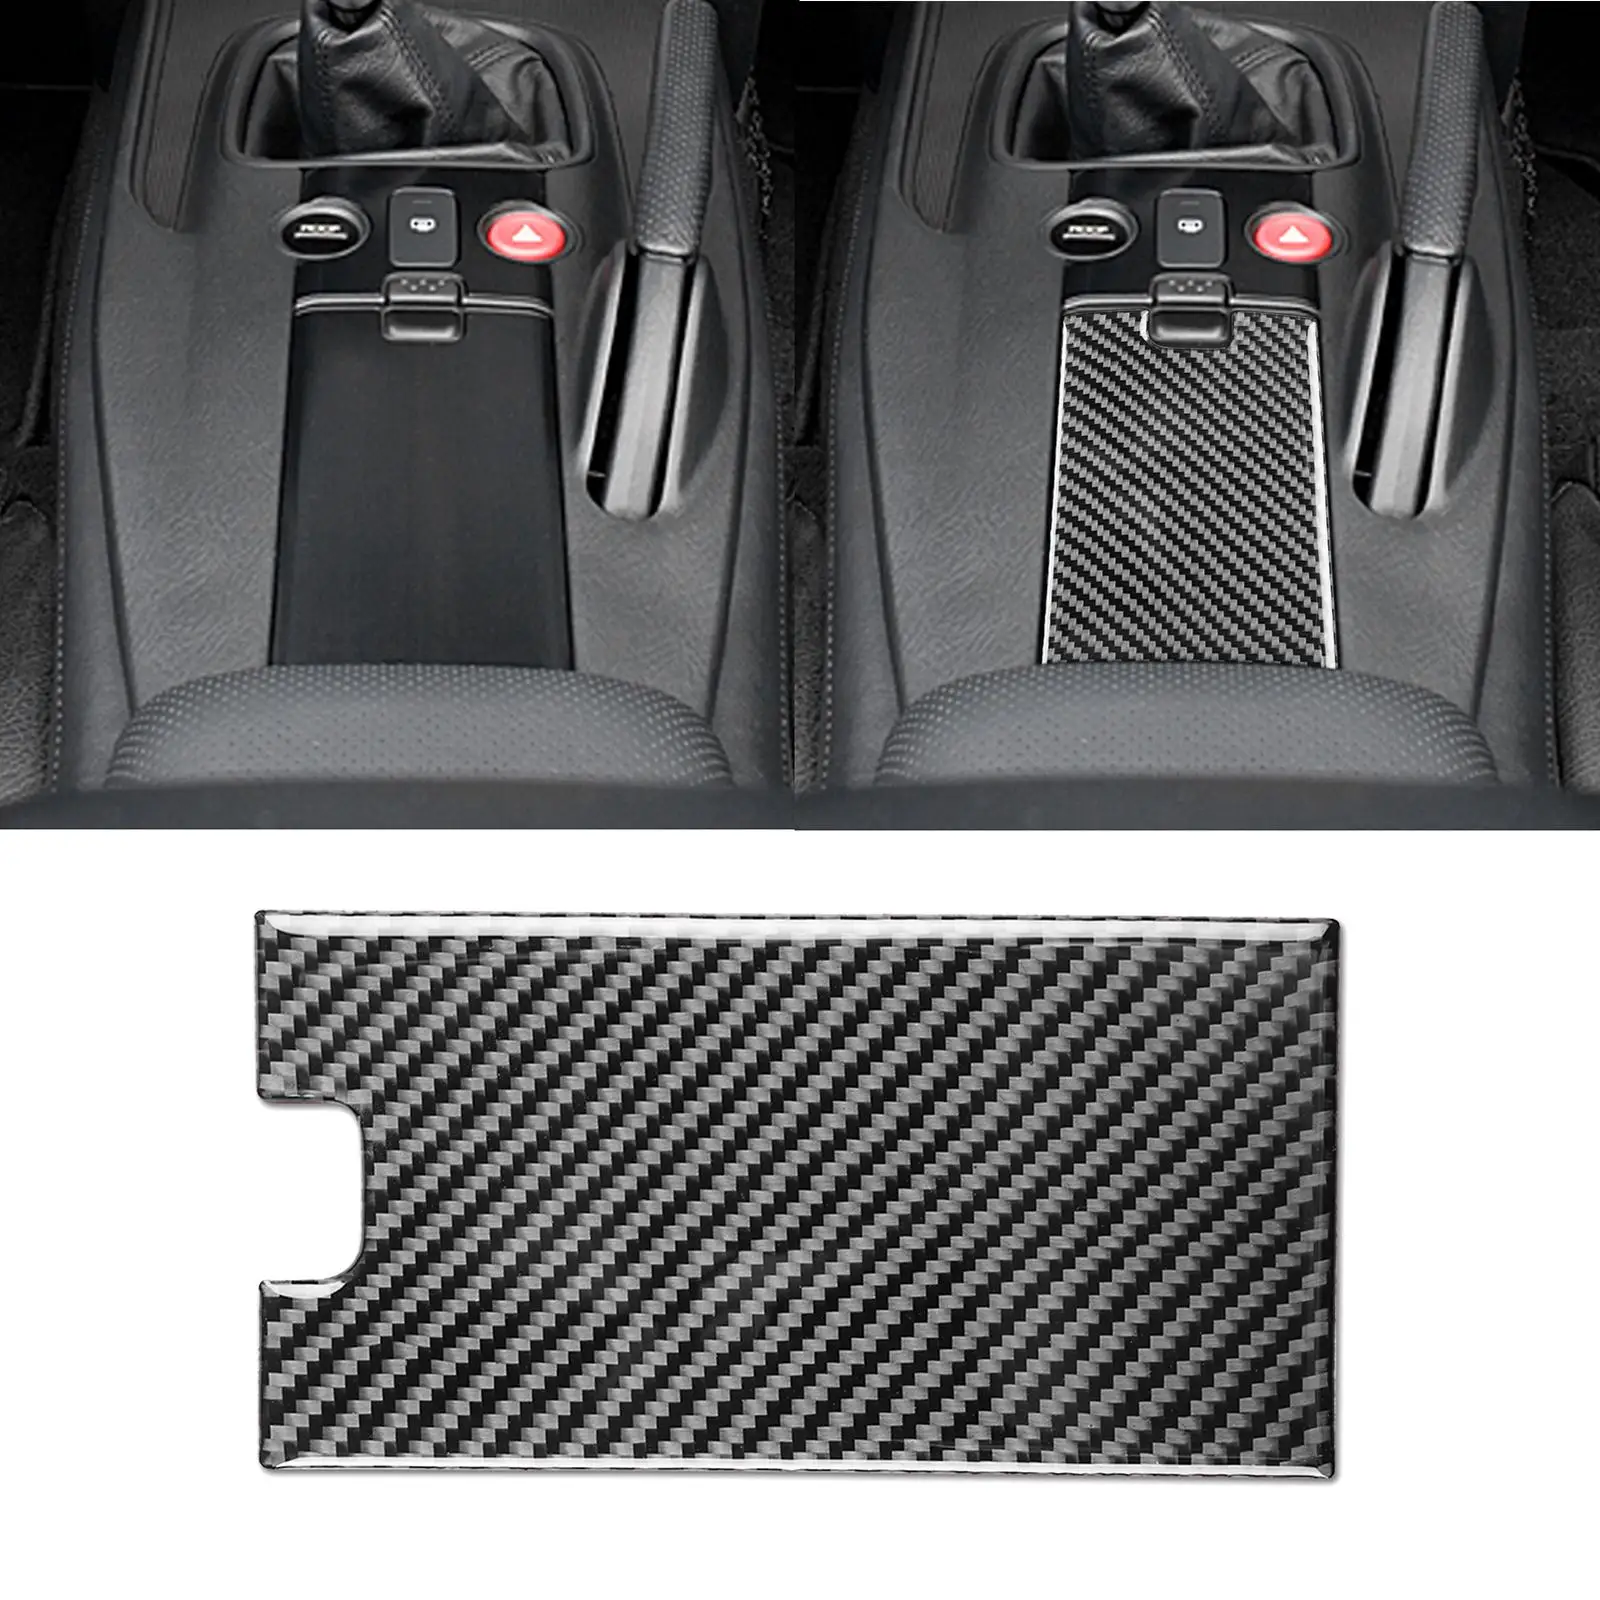 Central Storage Box Cover Trim Carbon Fiber Grain Interior Accessories for Honda 2004 to 2009 Professional Easily Install